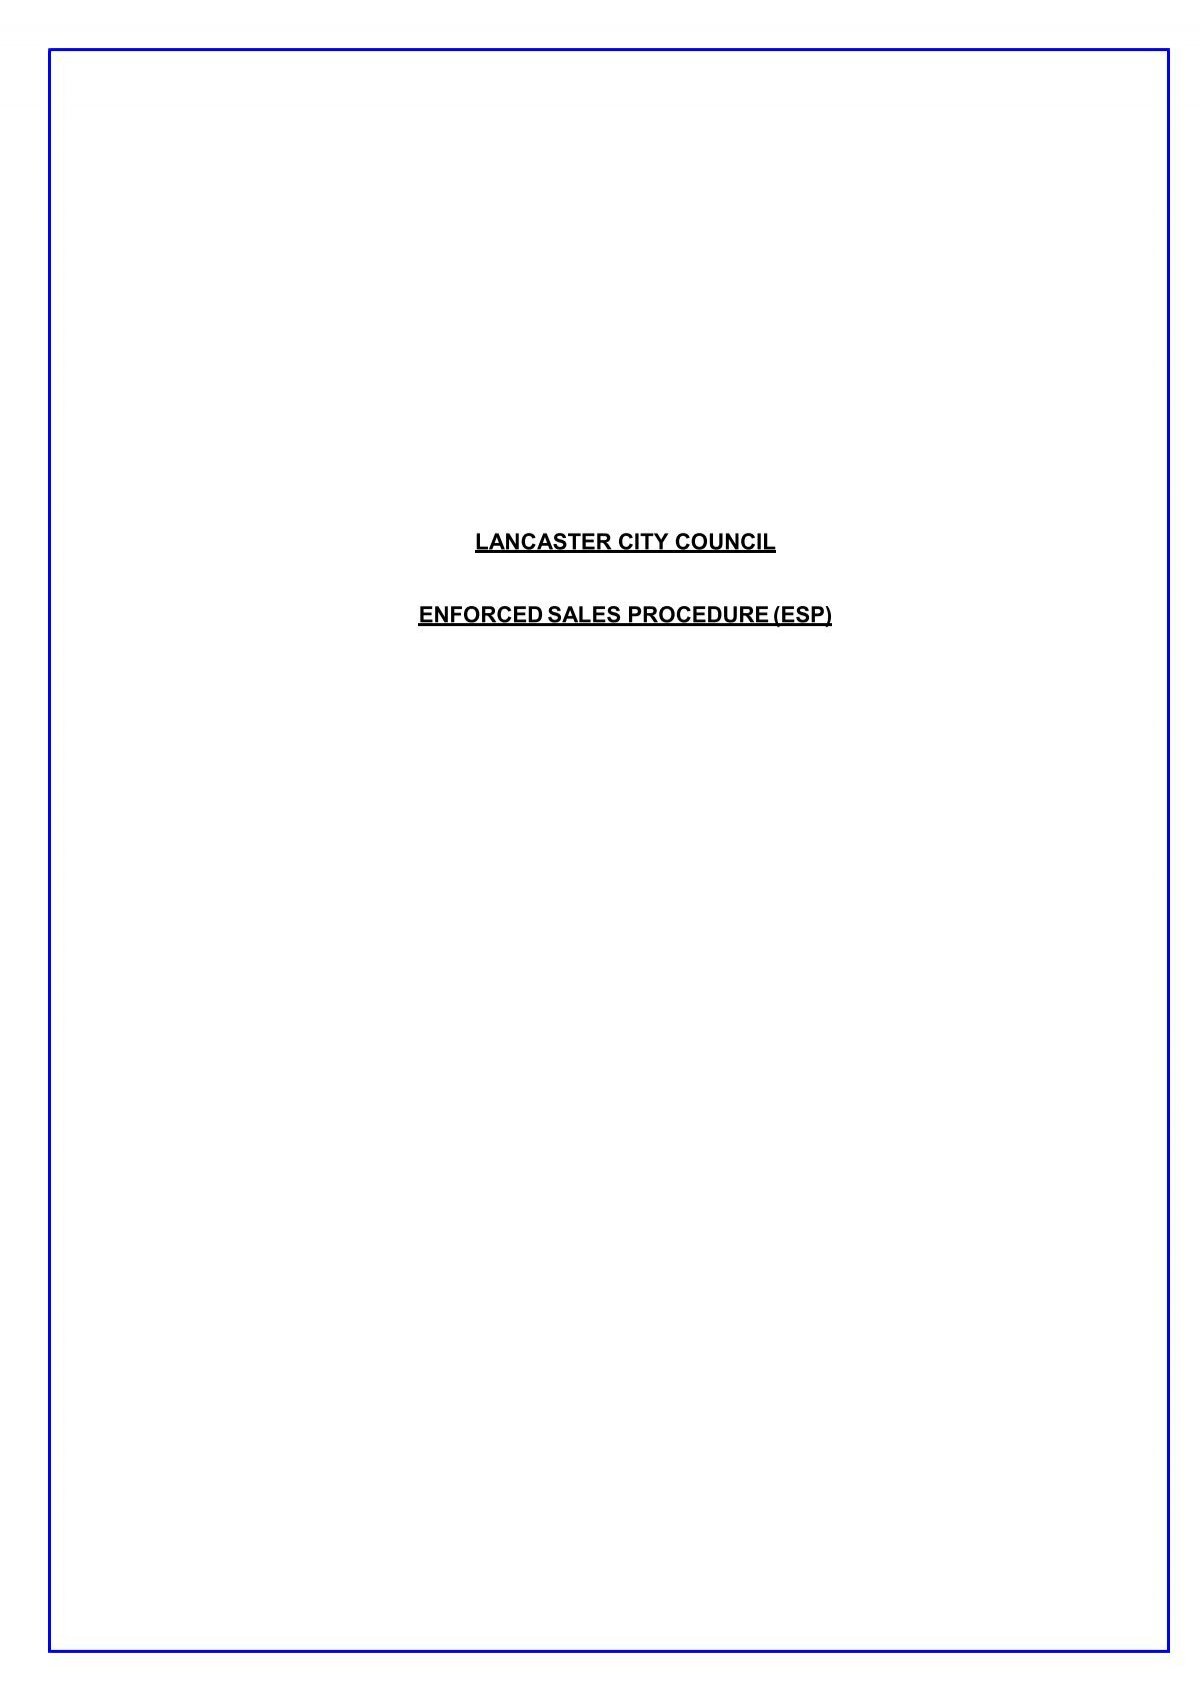 LCC ESP 25 06 12.pdf PDF 78 KB - Lancaster City Council